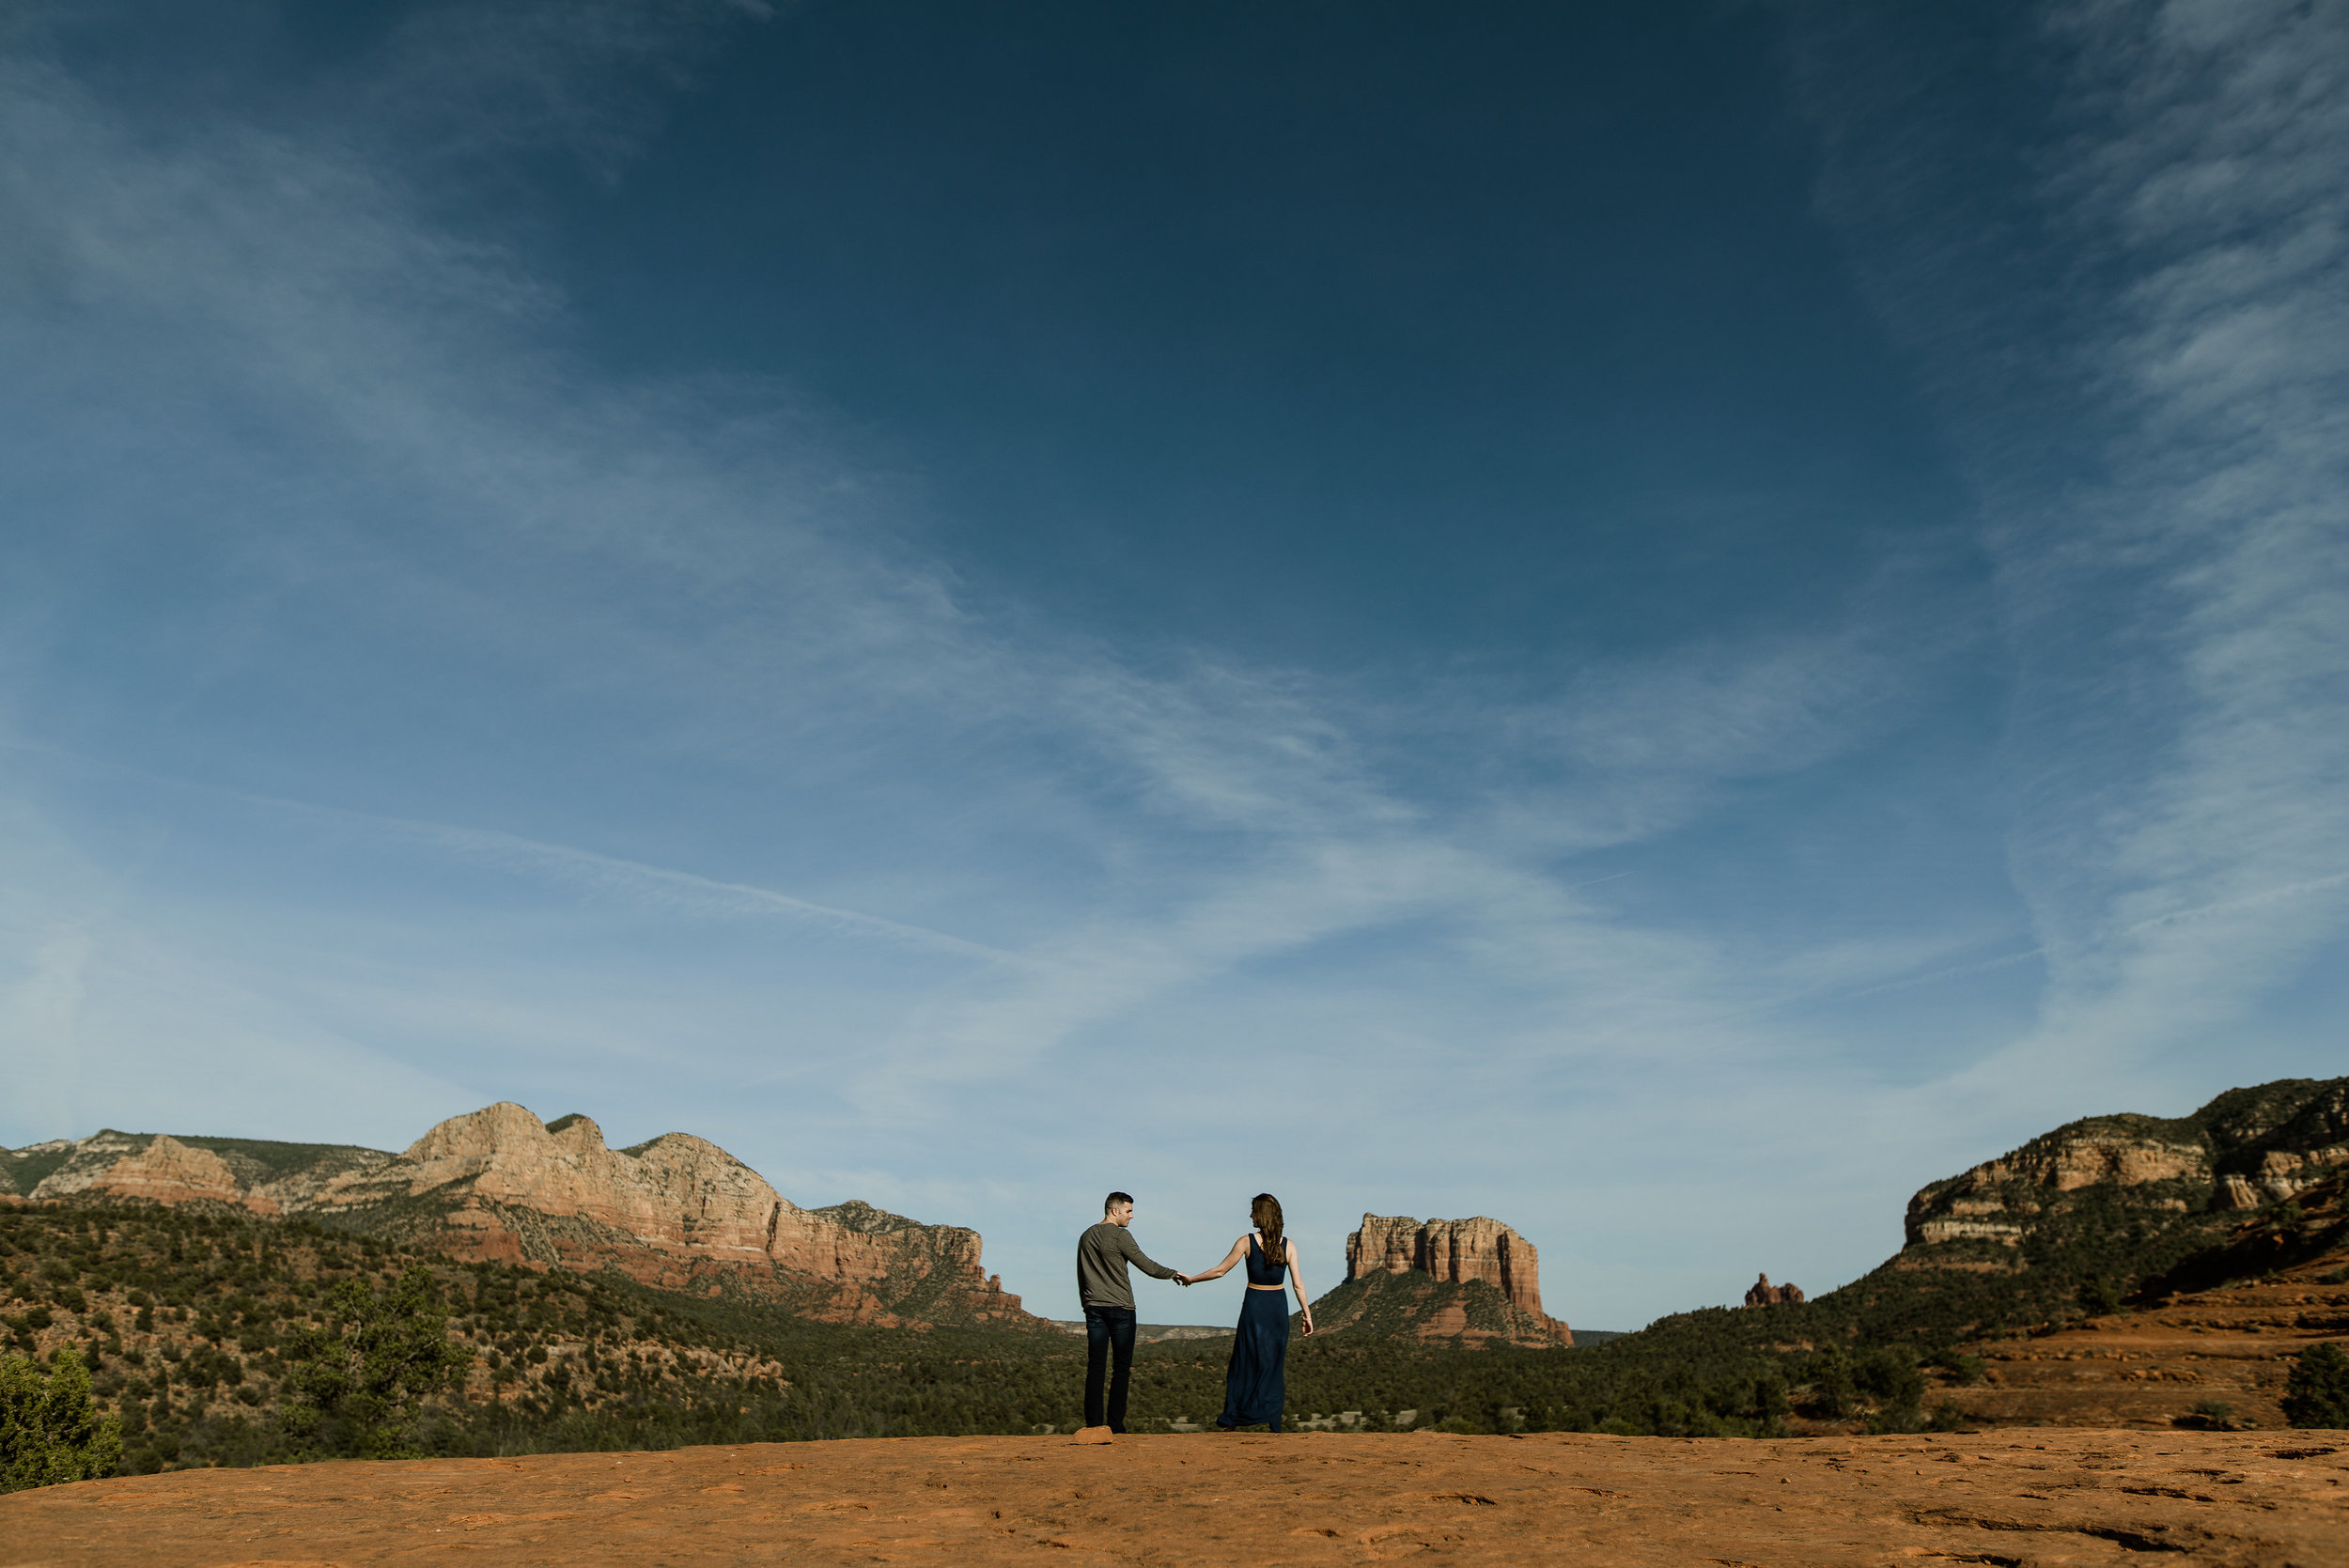 Isaiah-&-Taylor-Photography---Paul-&-Karen-Engagement,-Sedona-Arizona-011.jpg